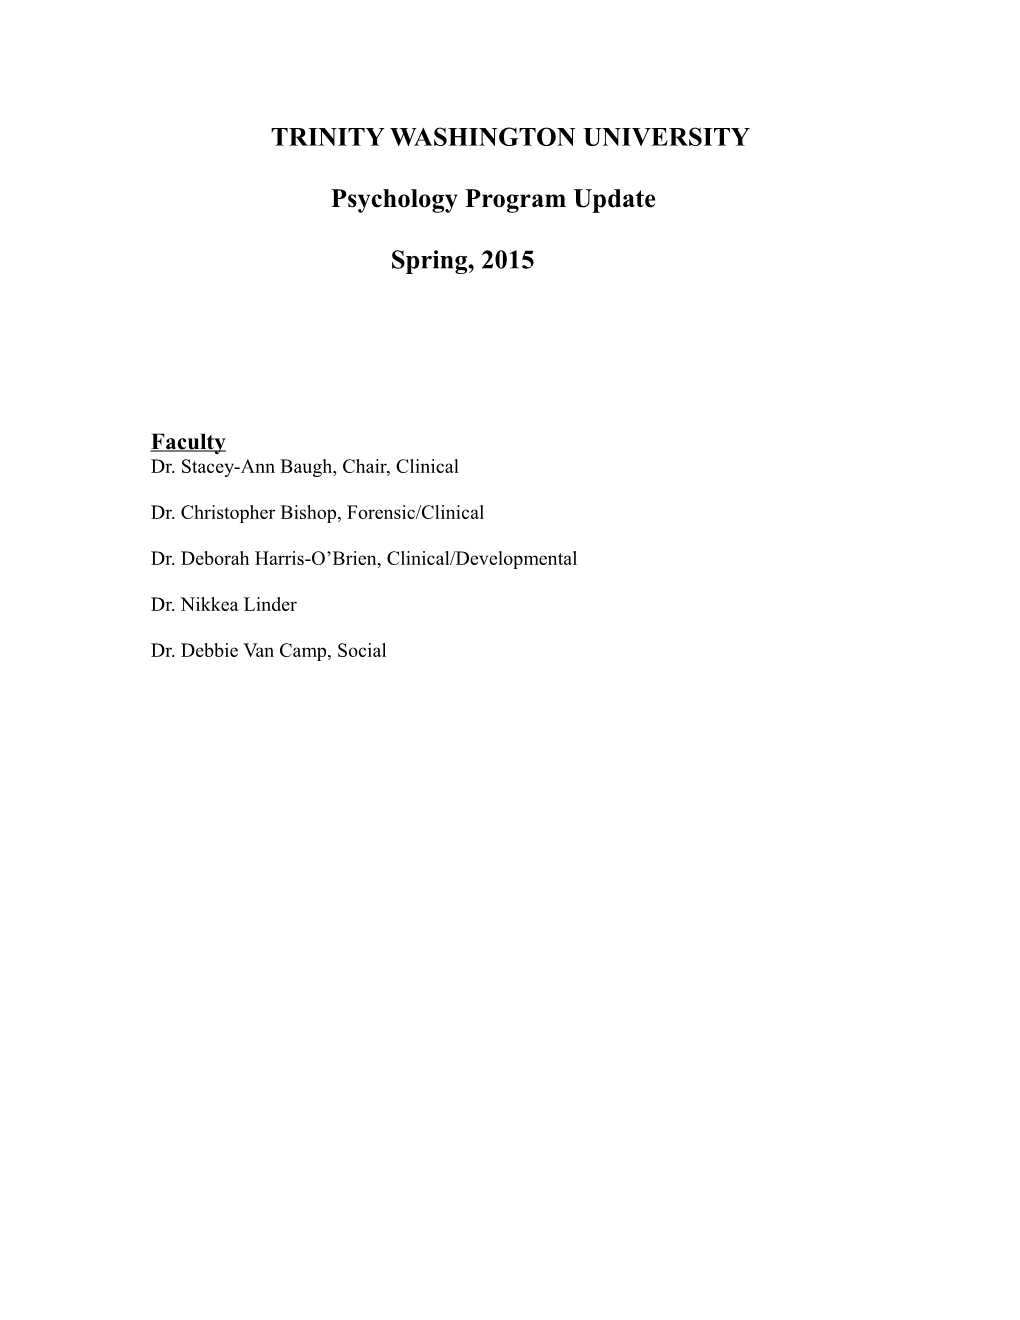 Psychology Program Update